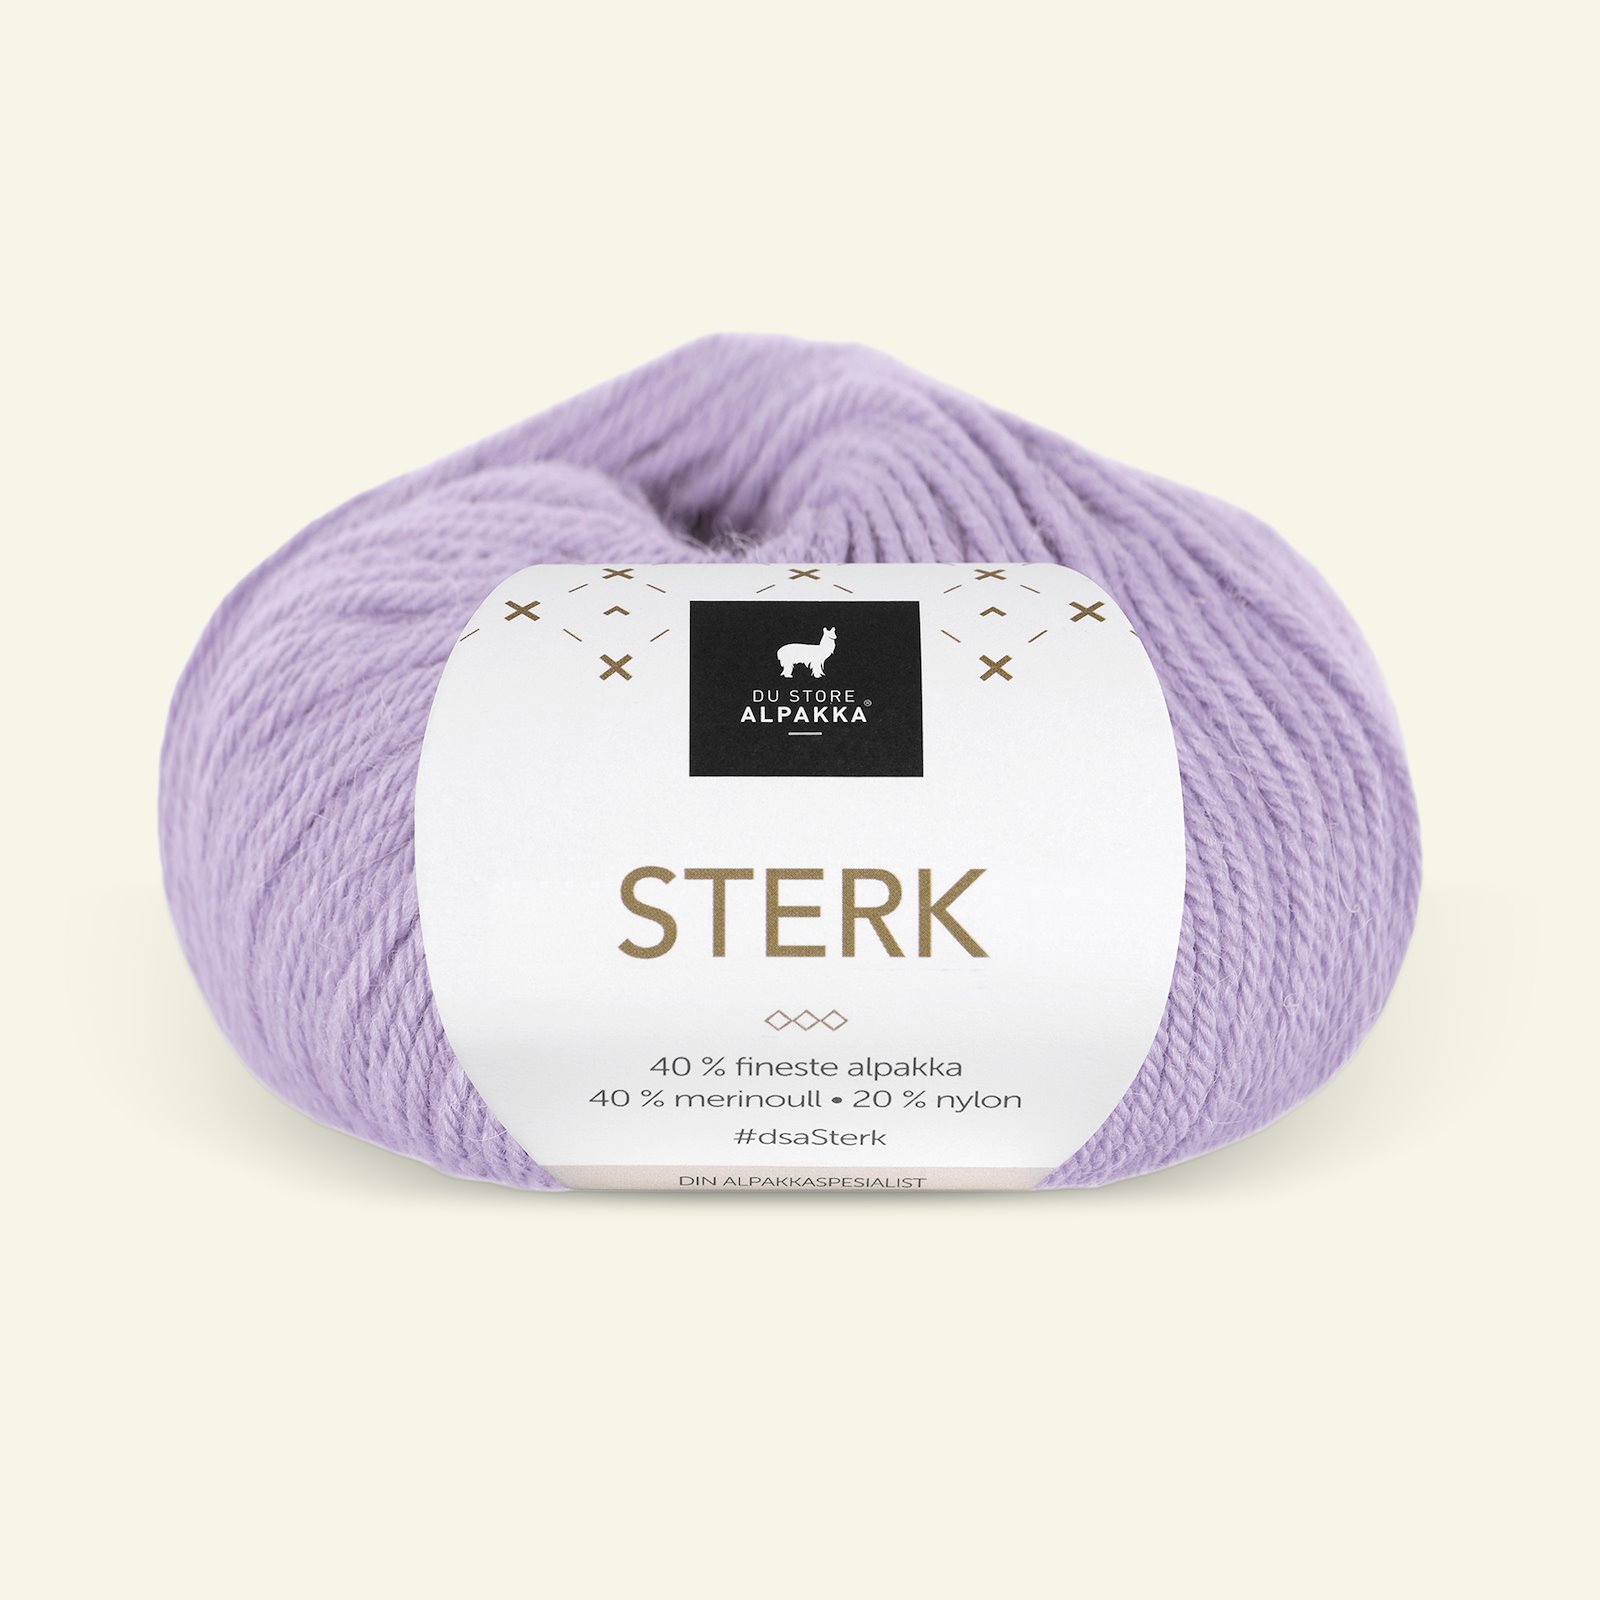 Du Store Alpakka, alpaca merino mixed yarn "Sterk", light lavender (912) 90000704_pack